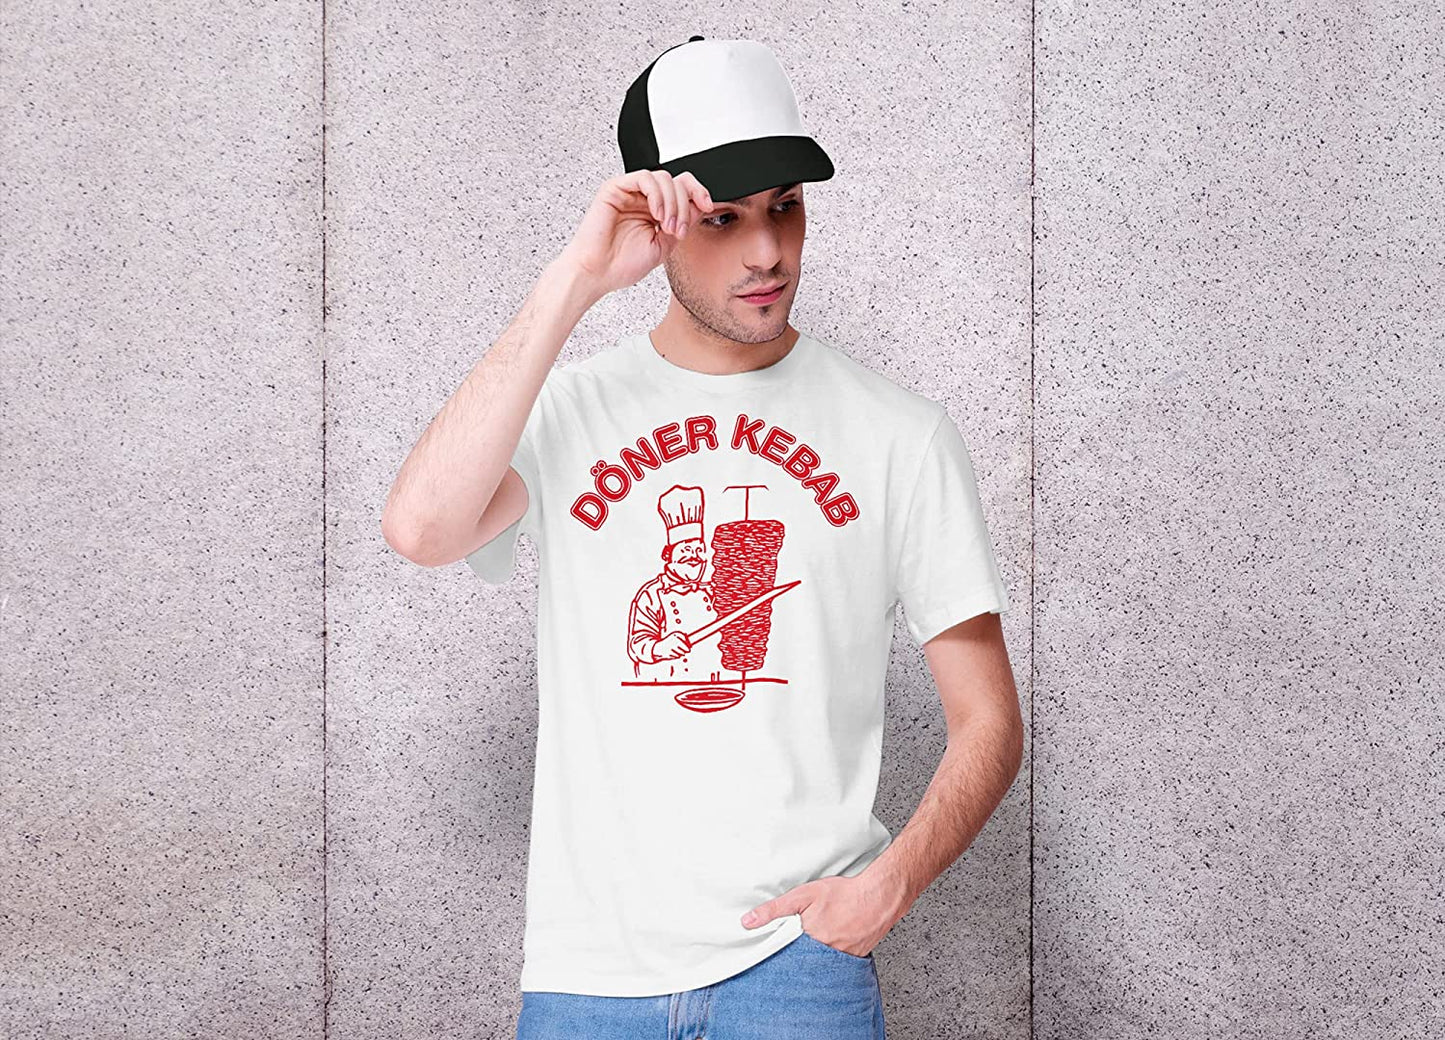 Döner Kebab T-Shirt, Weißes Herren Shirt, Männer Tshirt, Kebab Logo (L)